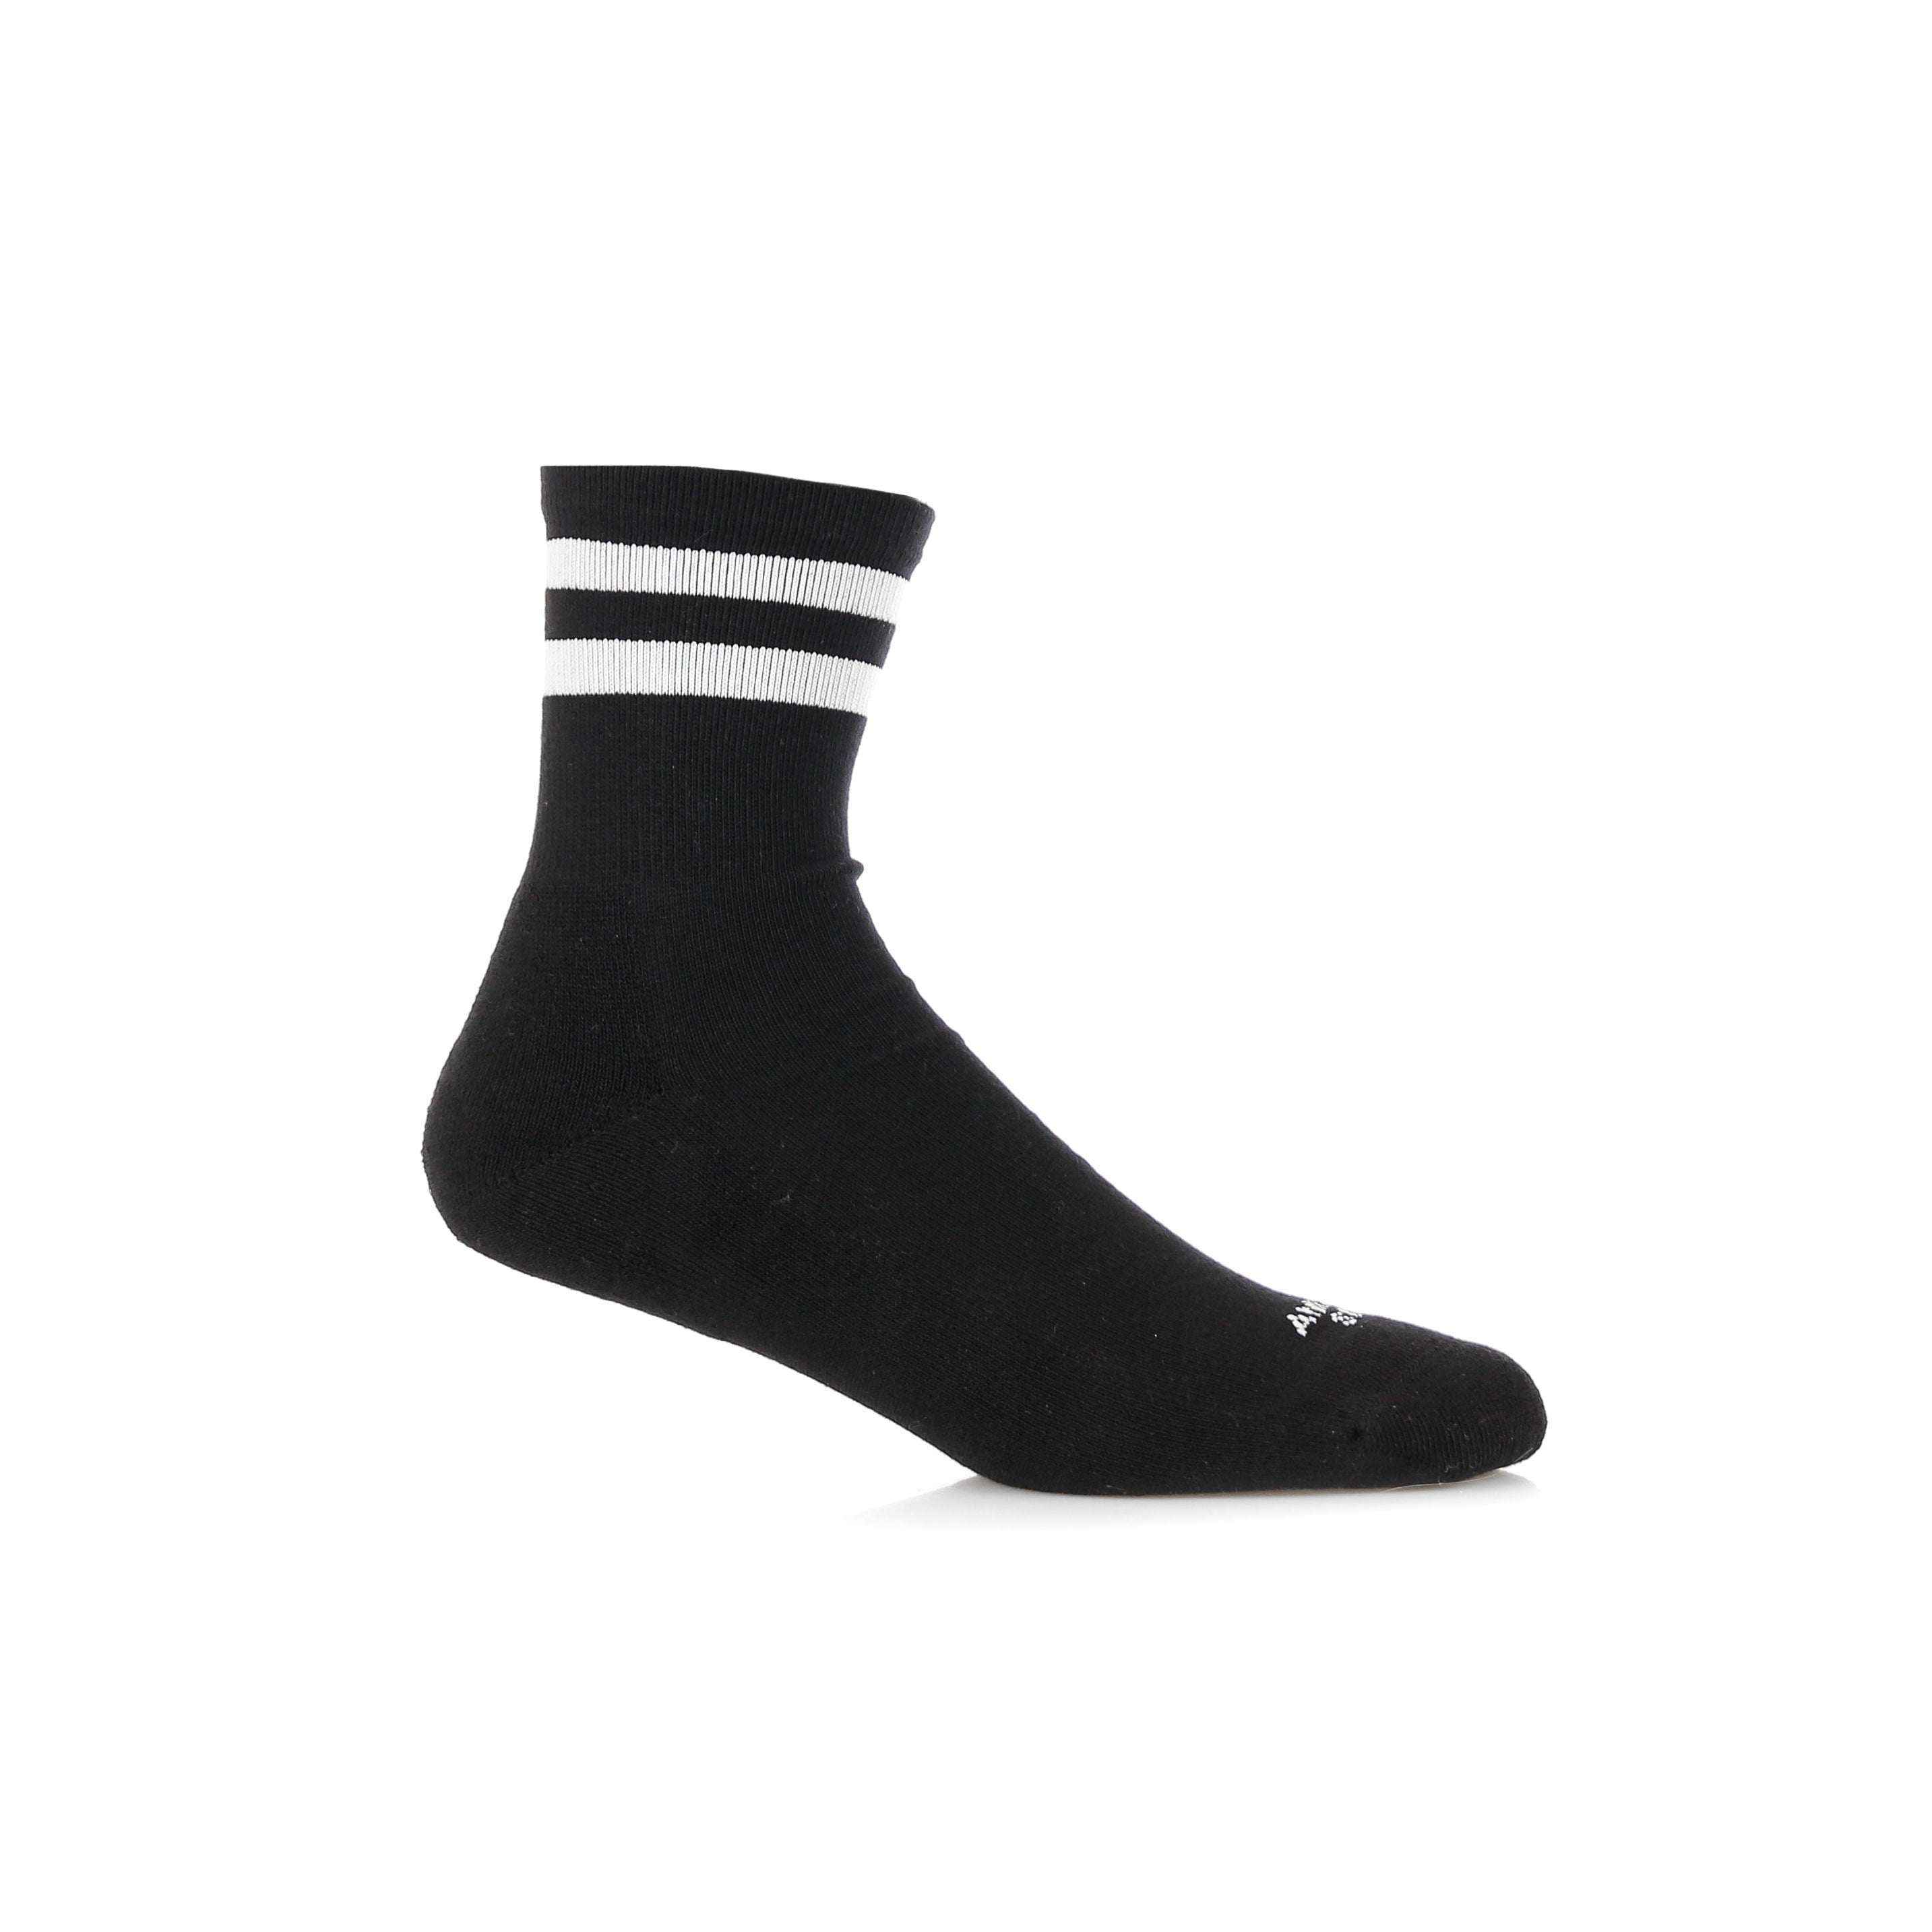 American Socks, Calza Bassa Uomo Back In Black, 